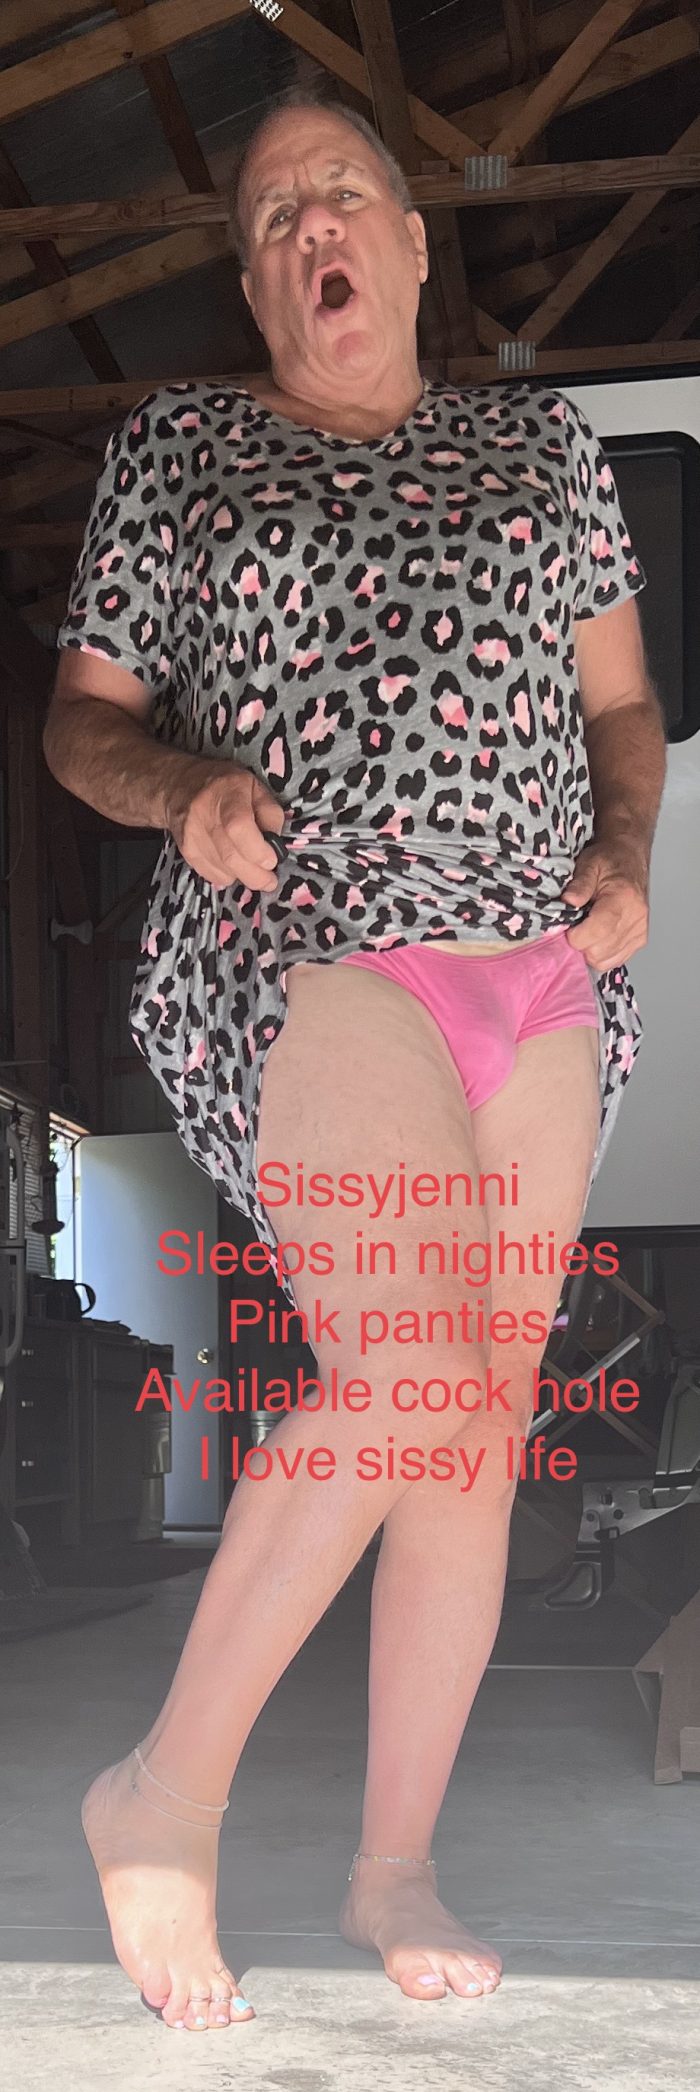 Sissyjenni in pink panties and nightie